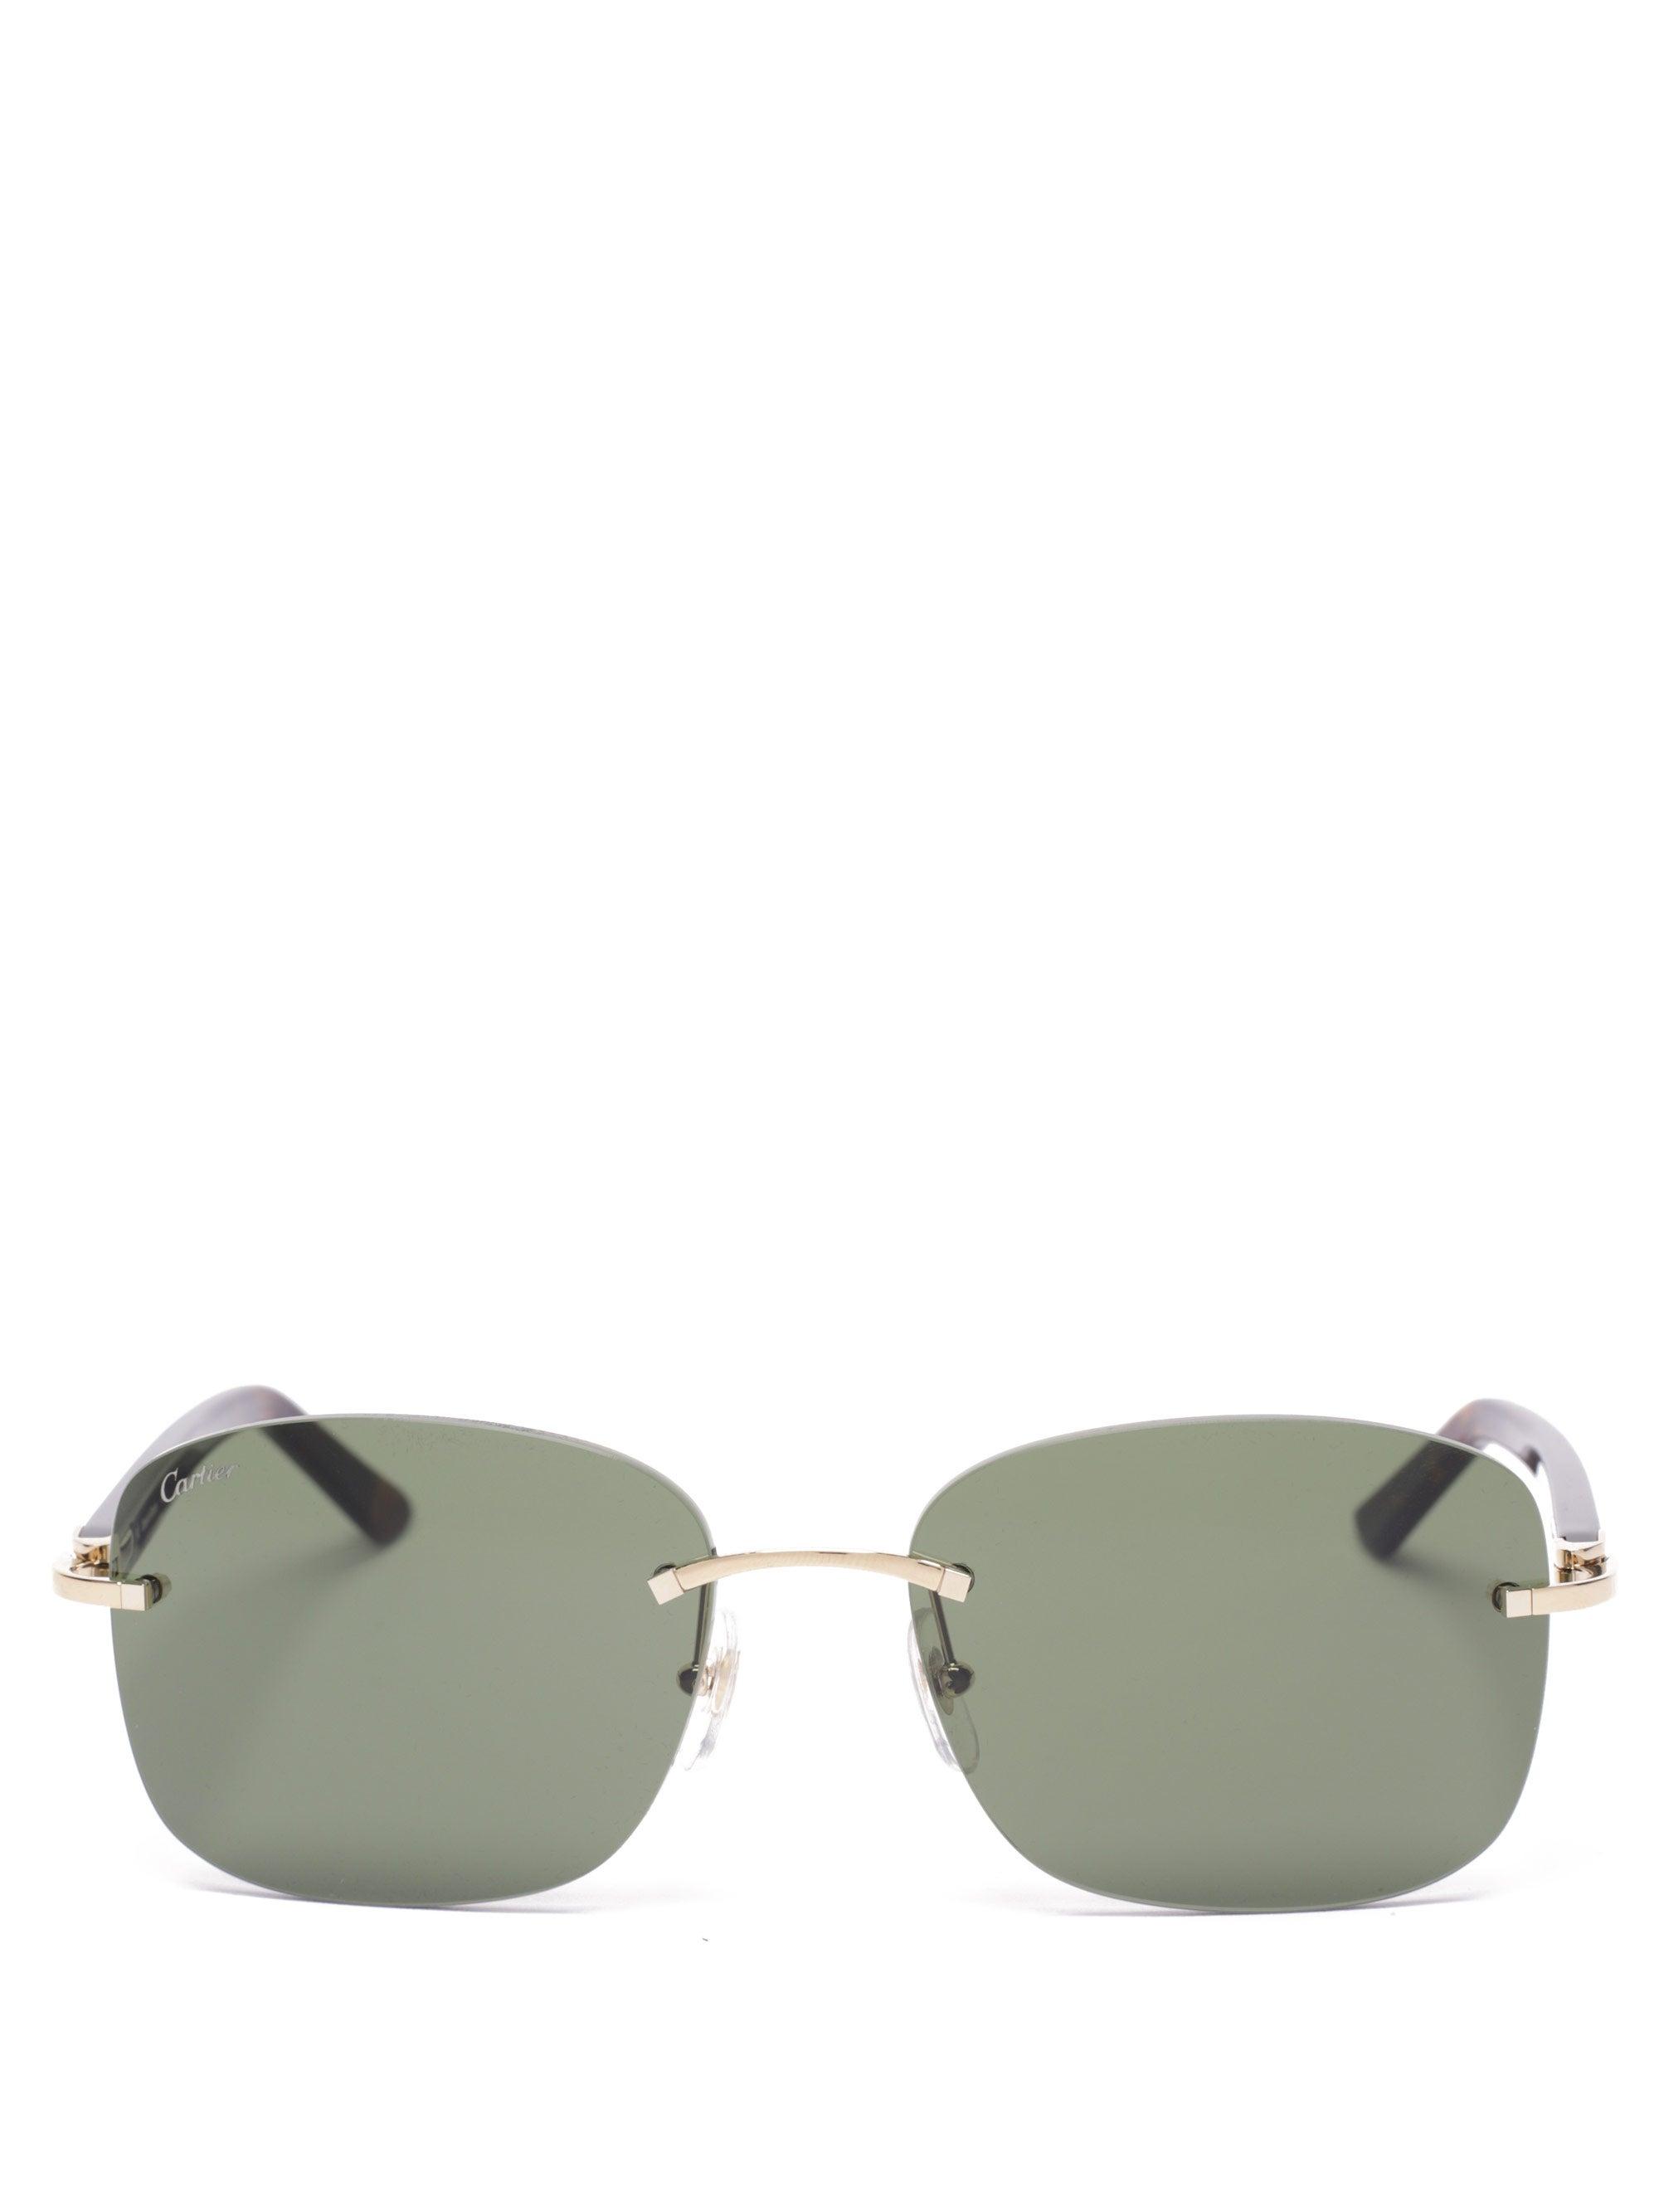 Cartier C Décor Rimless Acetate Sunglasses in Green for Men - Lyst